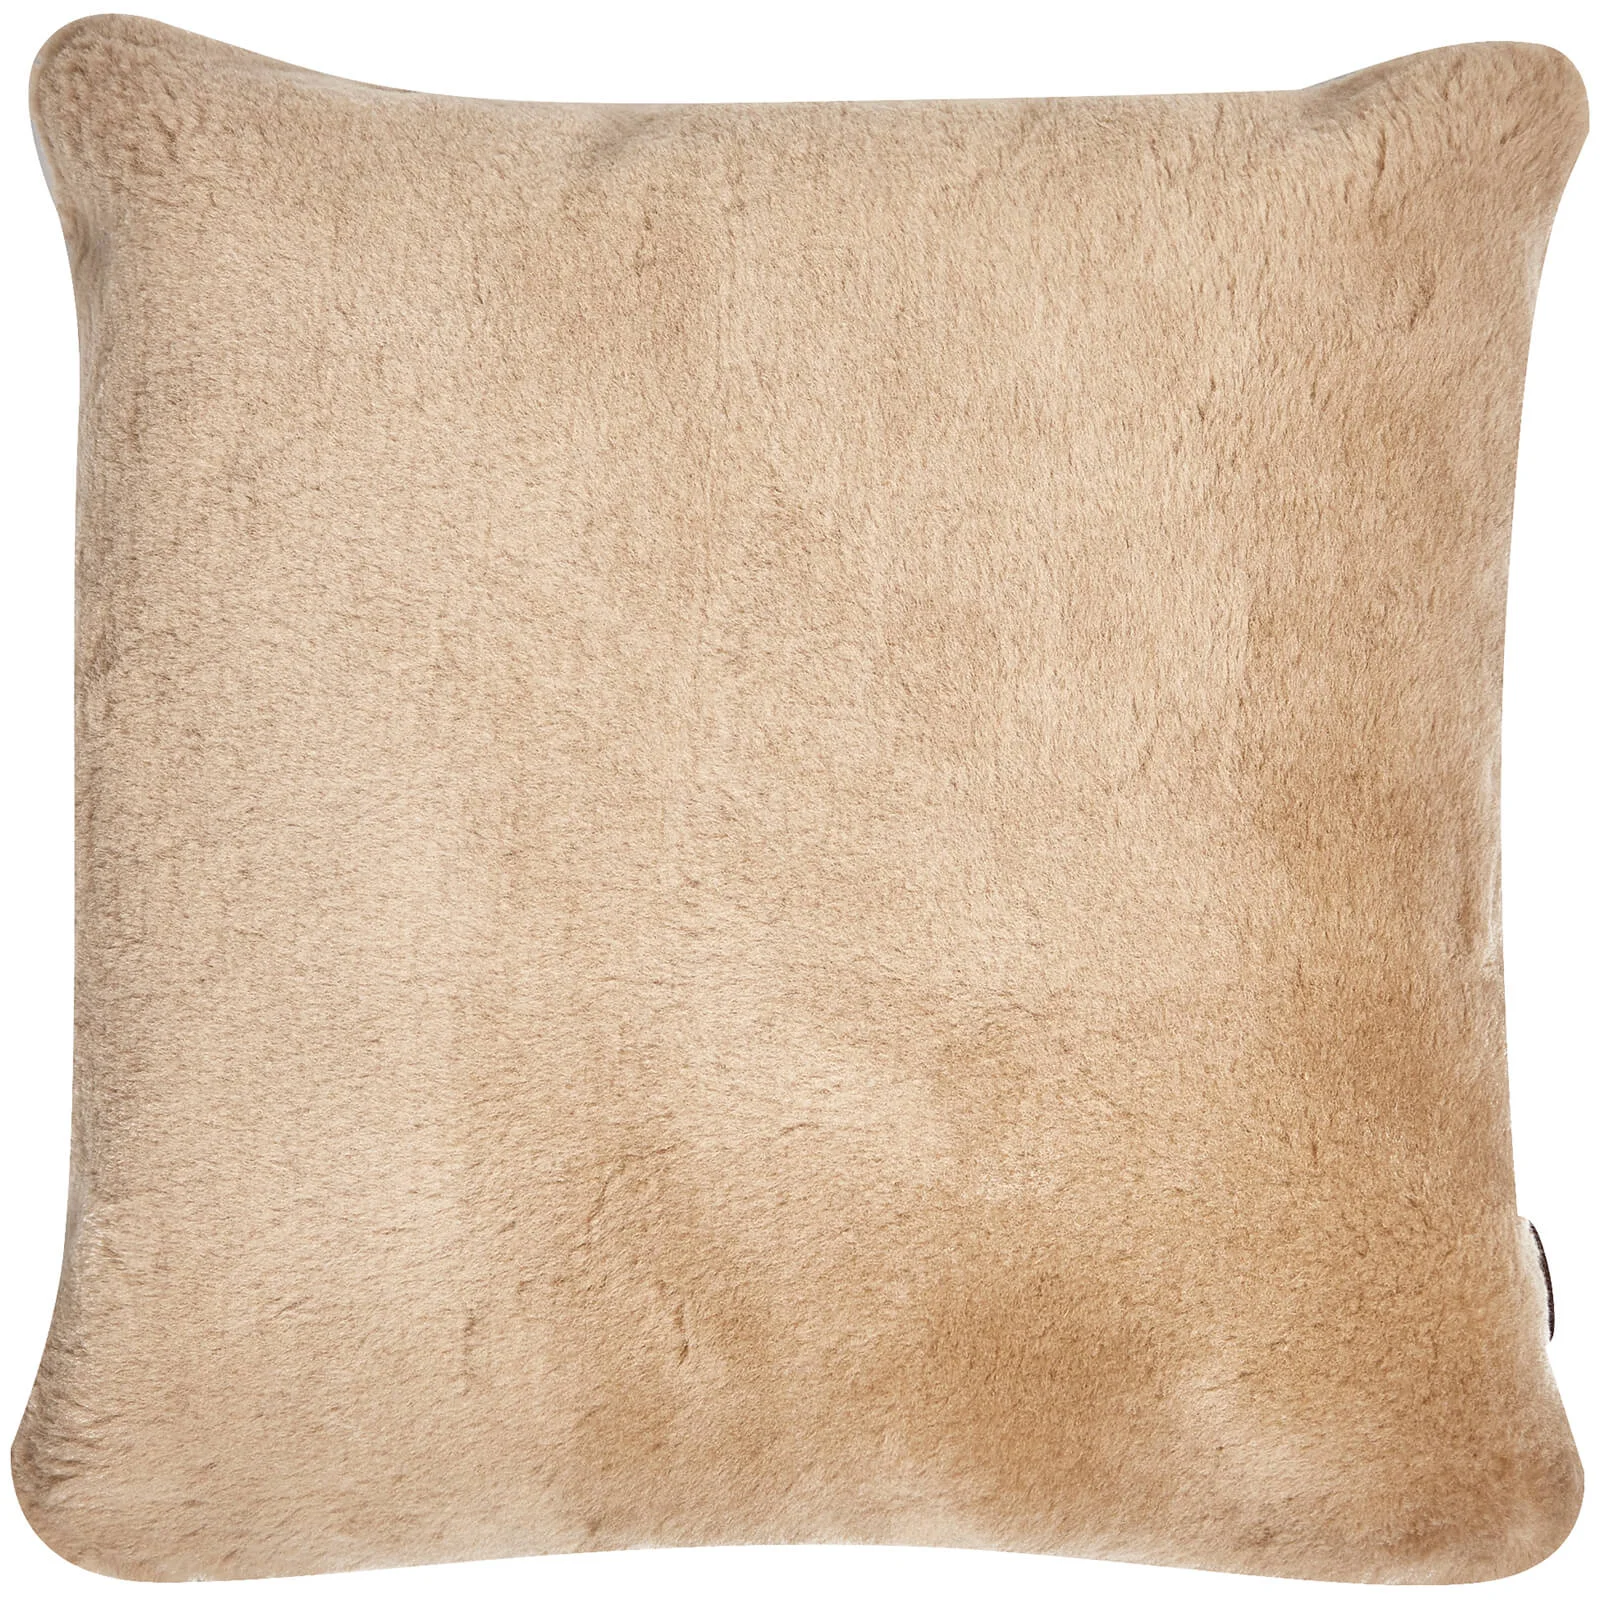 UGG Classic Cushion Cover - Sand (50x50cm) Image 1